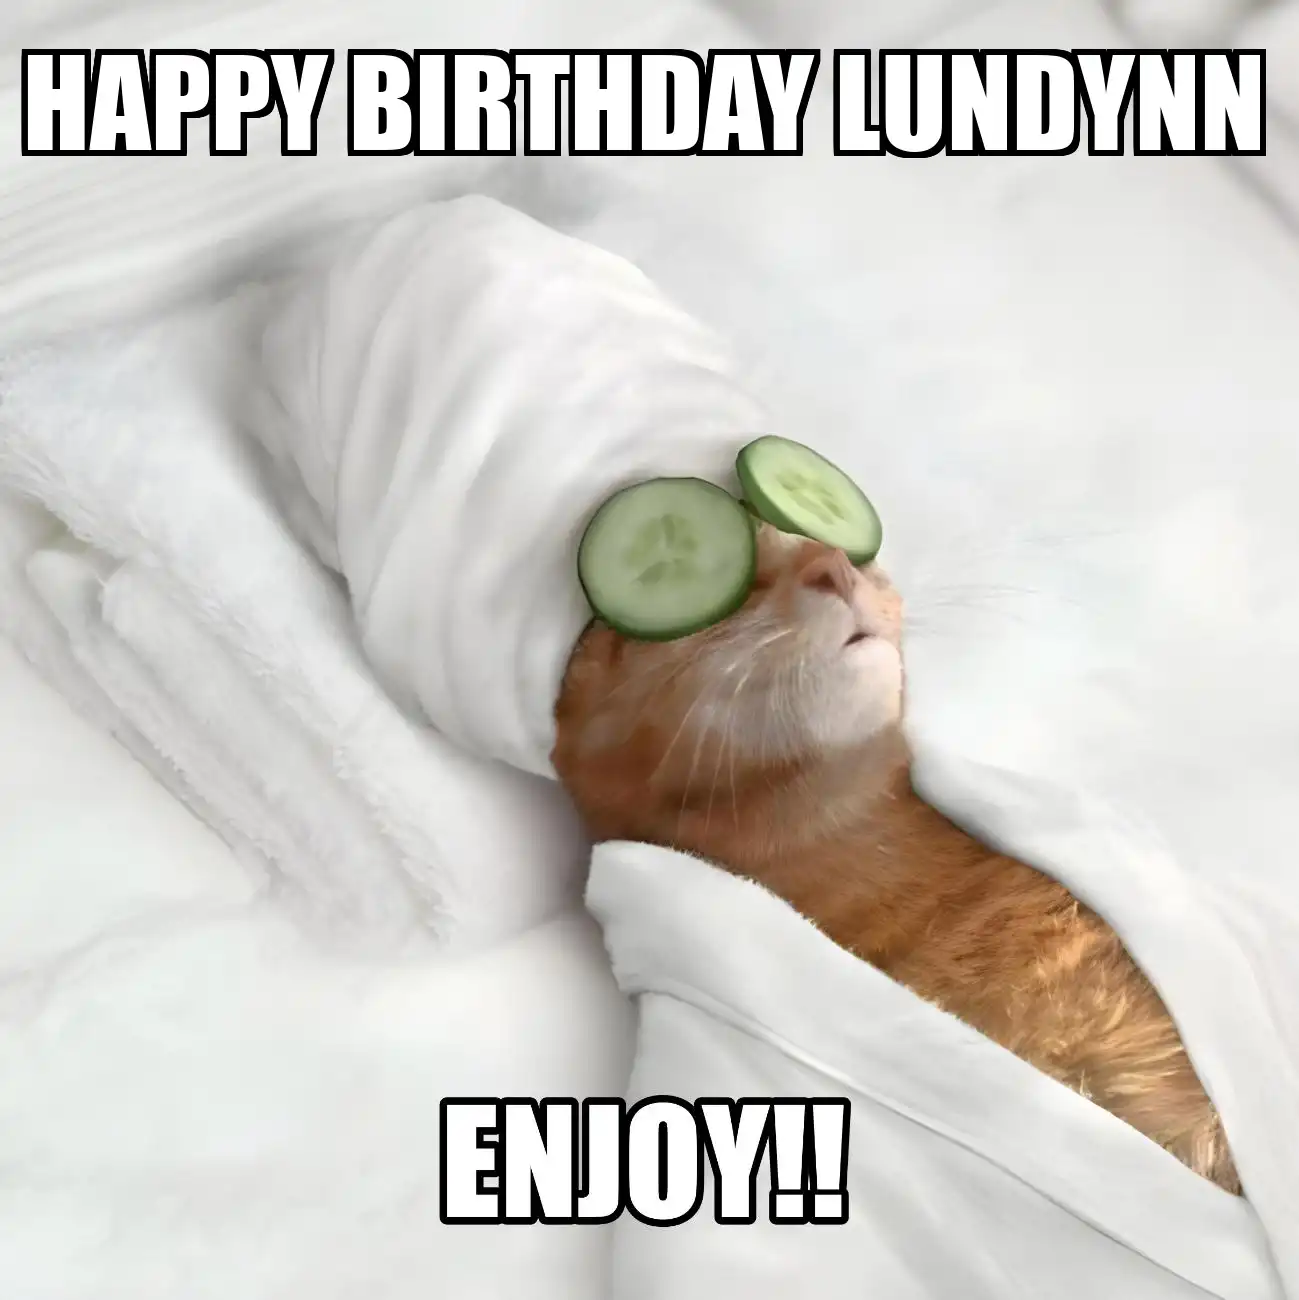 Happy Birthday Lundynn Enjoy Cat Meme